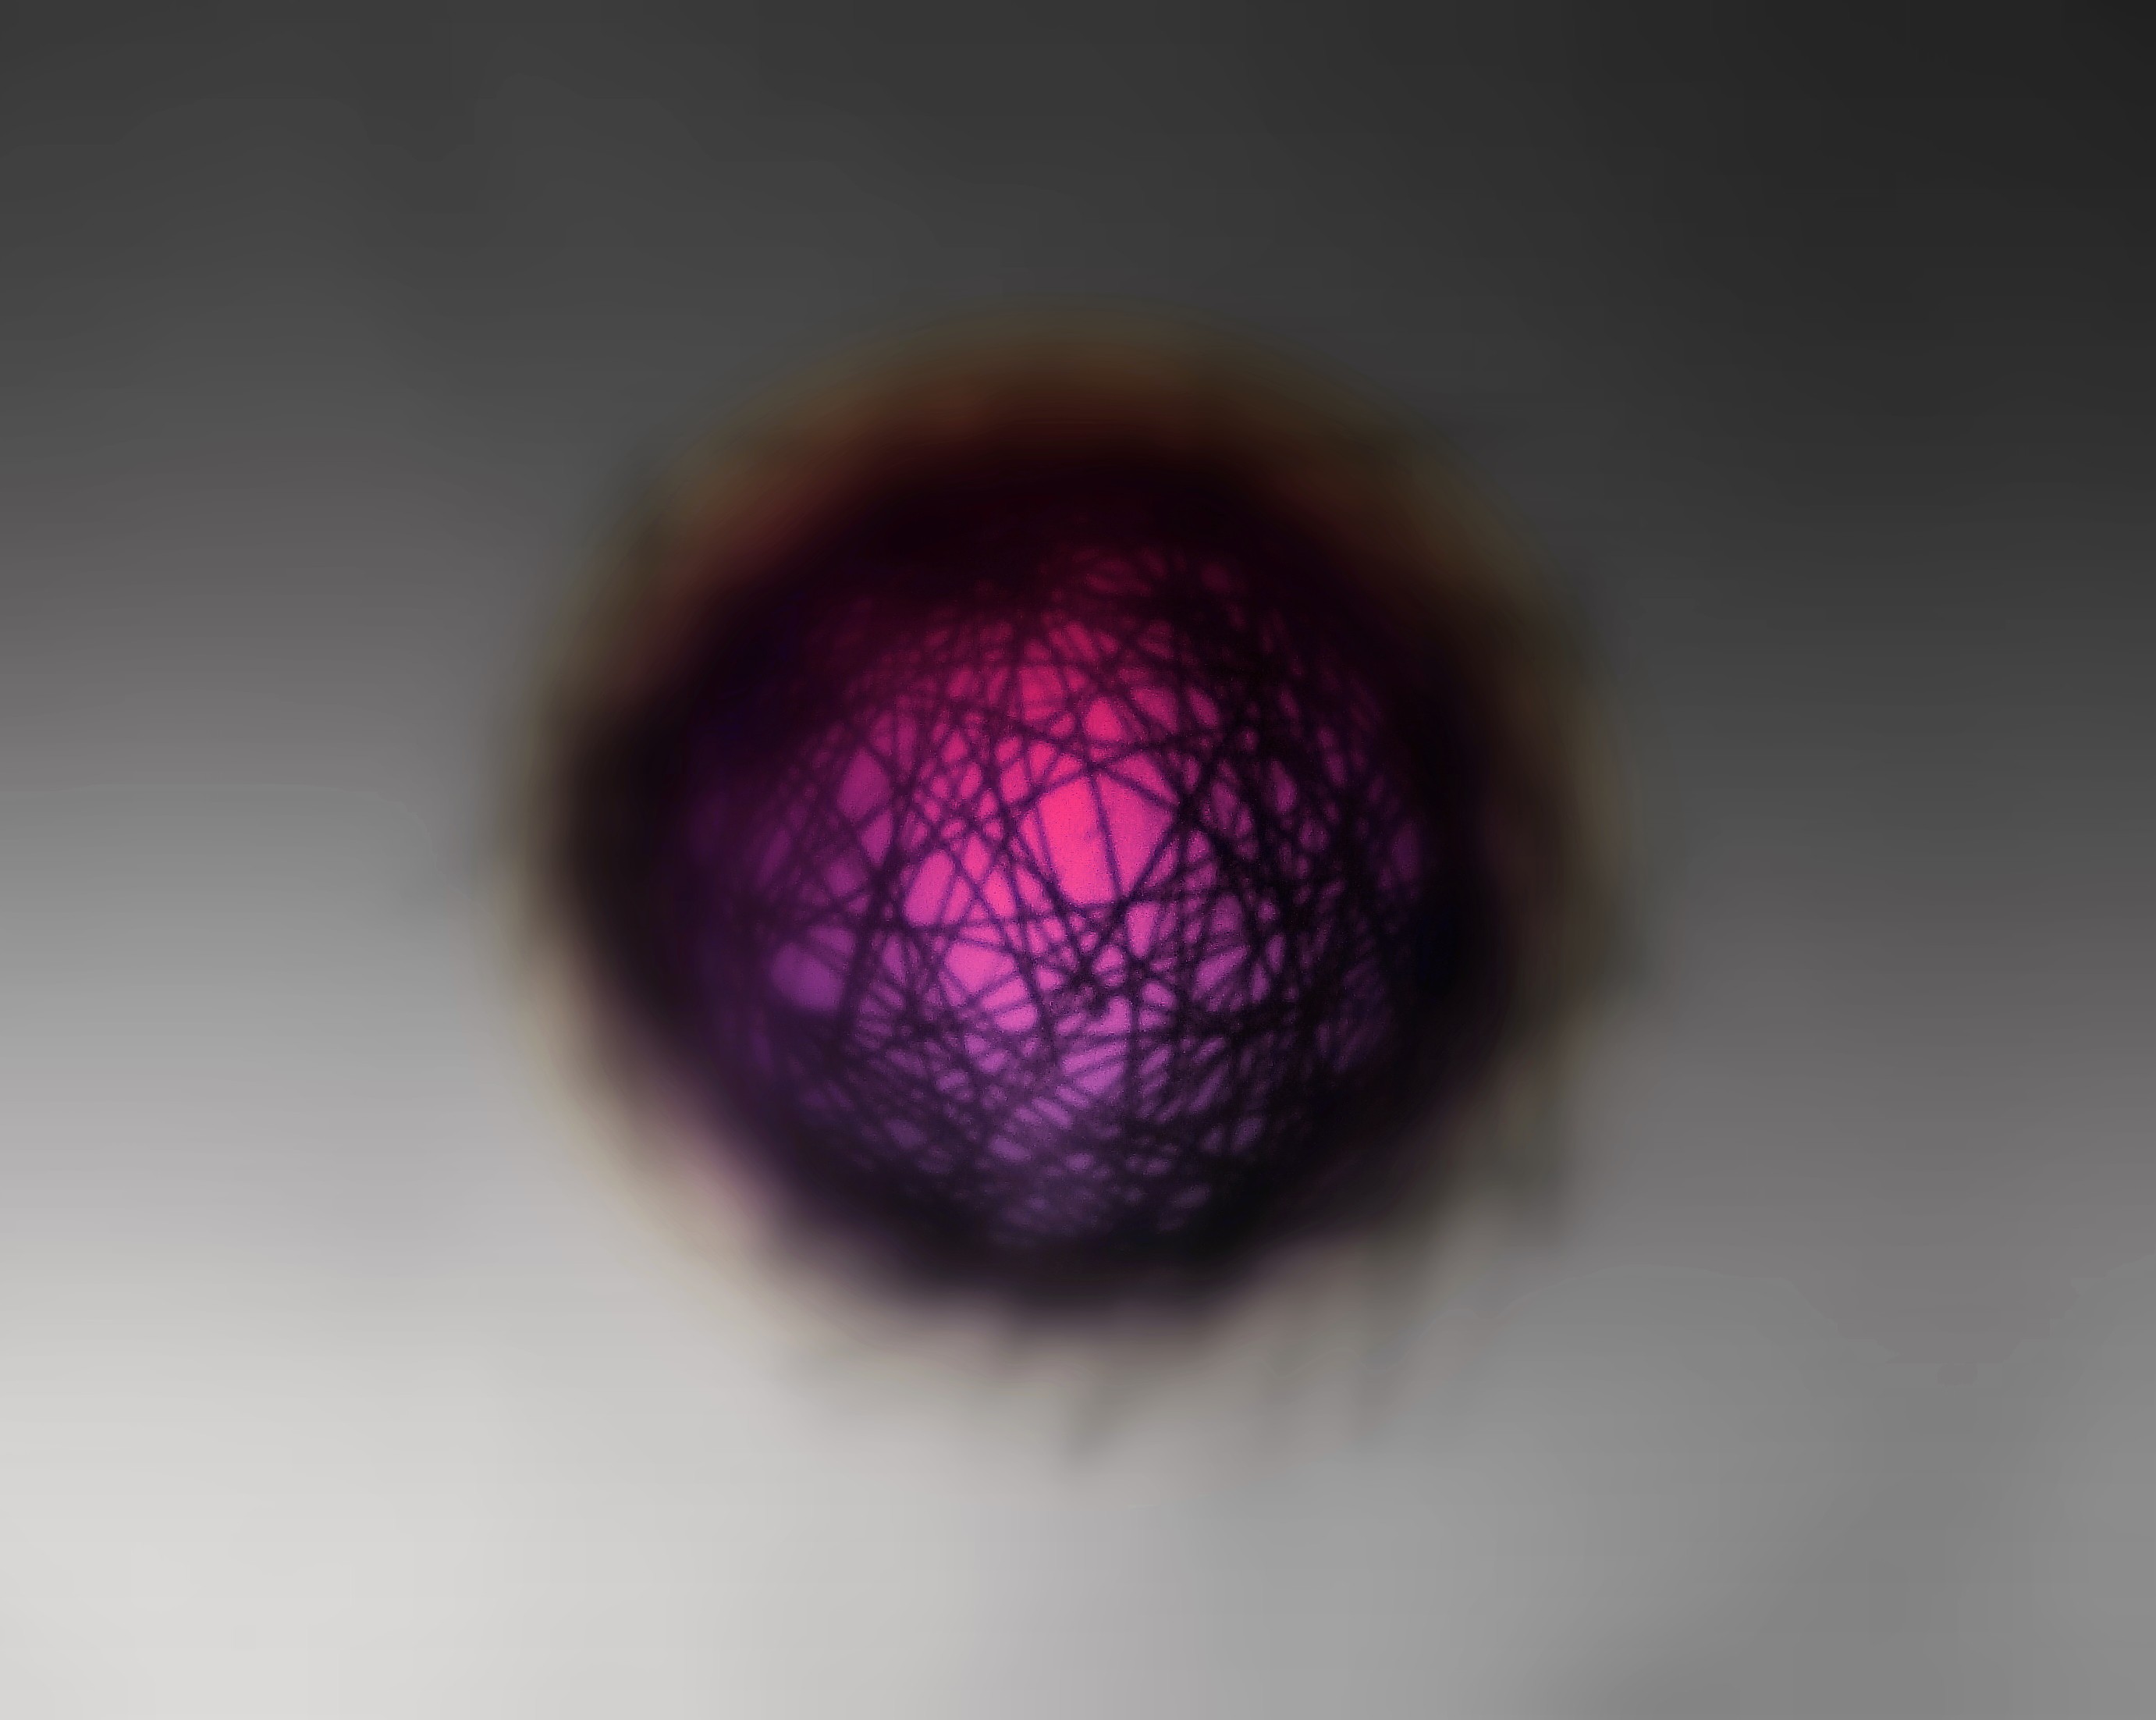 black, outer space, white, pink, purple, balls, grey, glowing, blur, drawings - desktop wallpaper